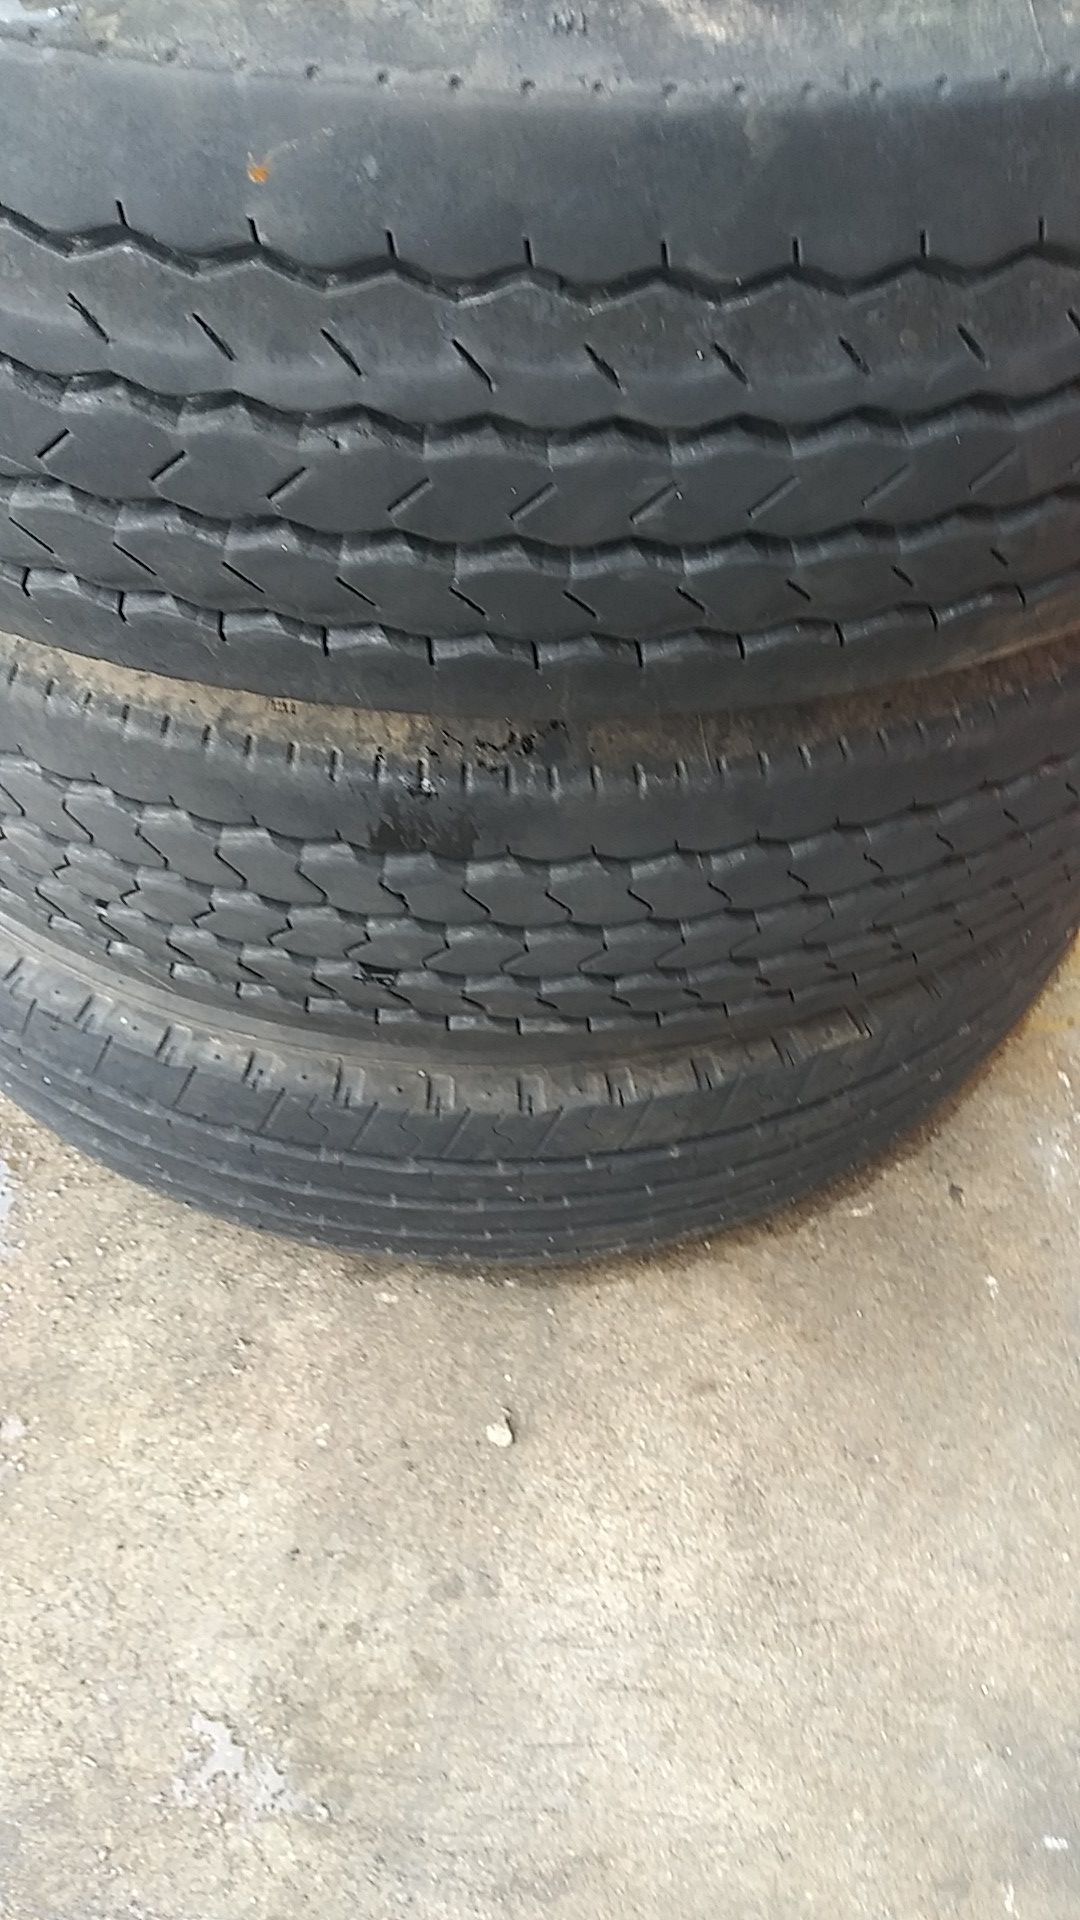 215 75 17.5. Trailer tires